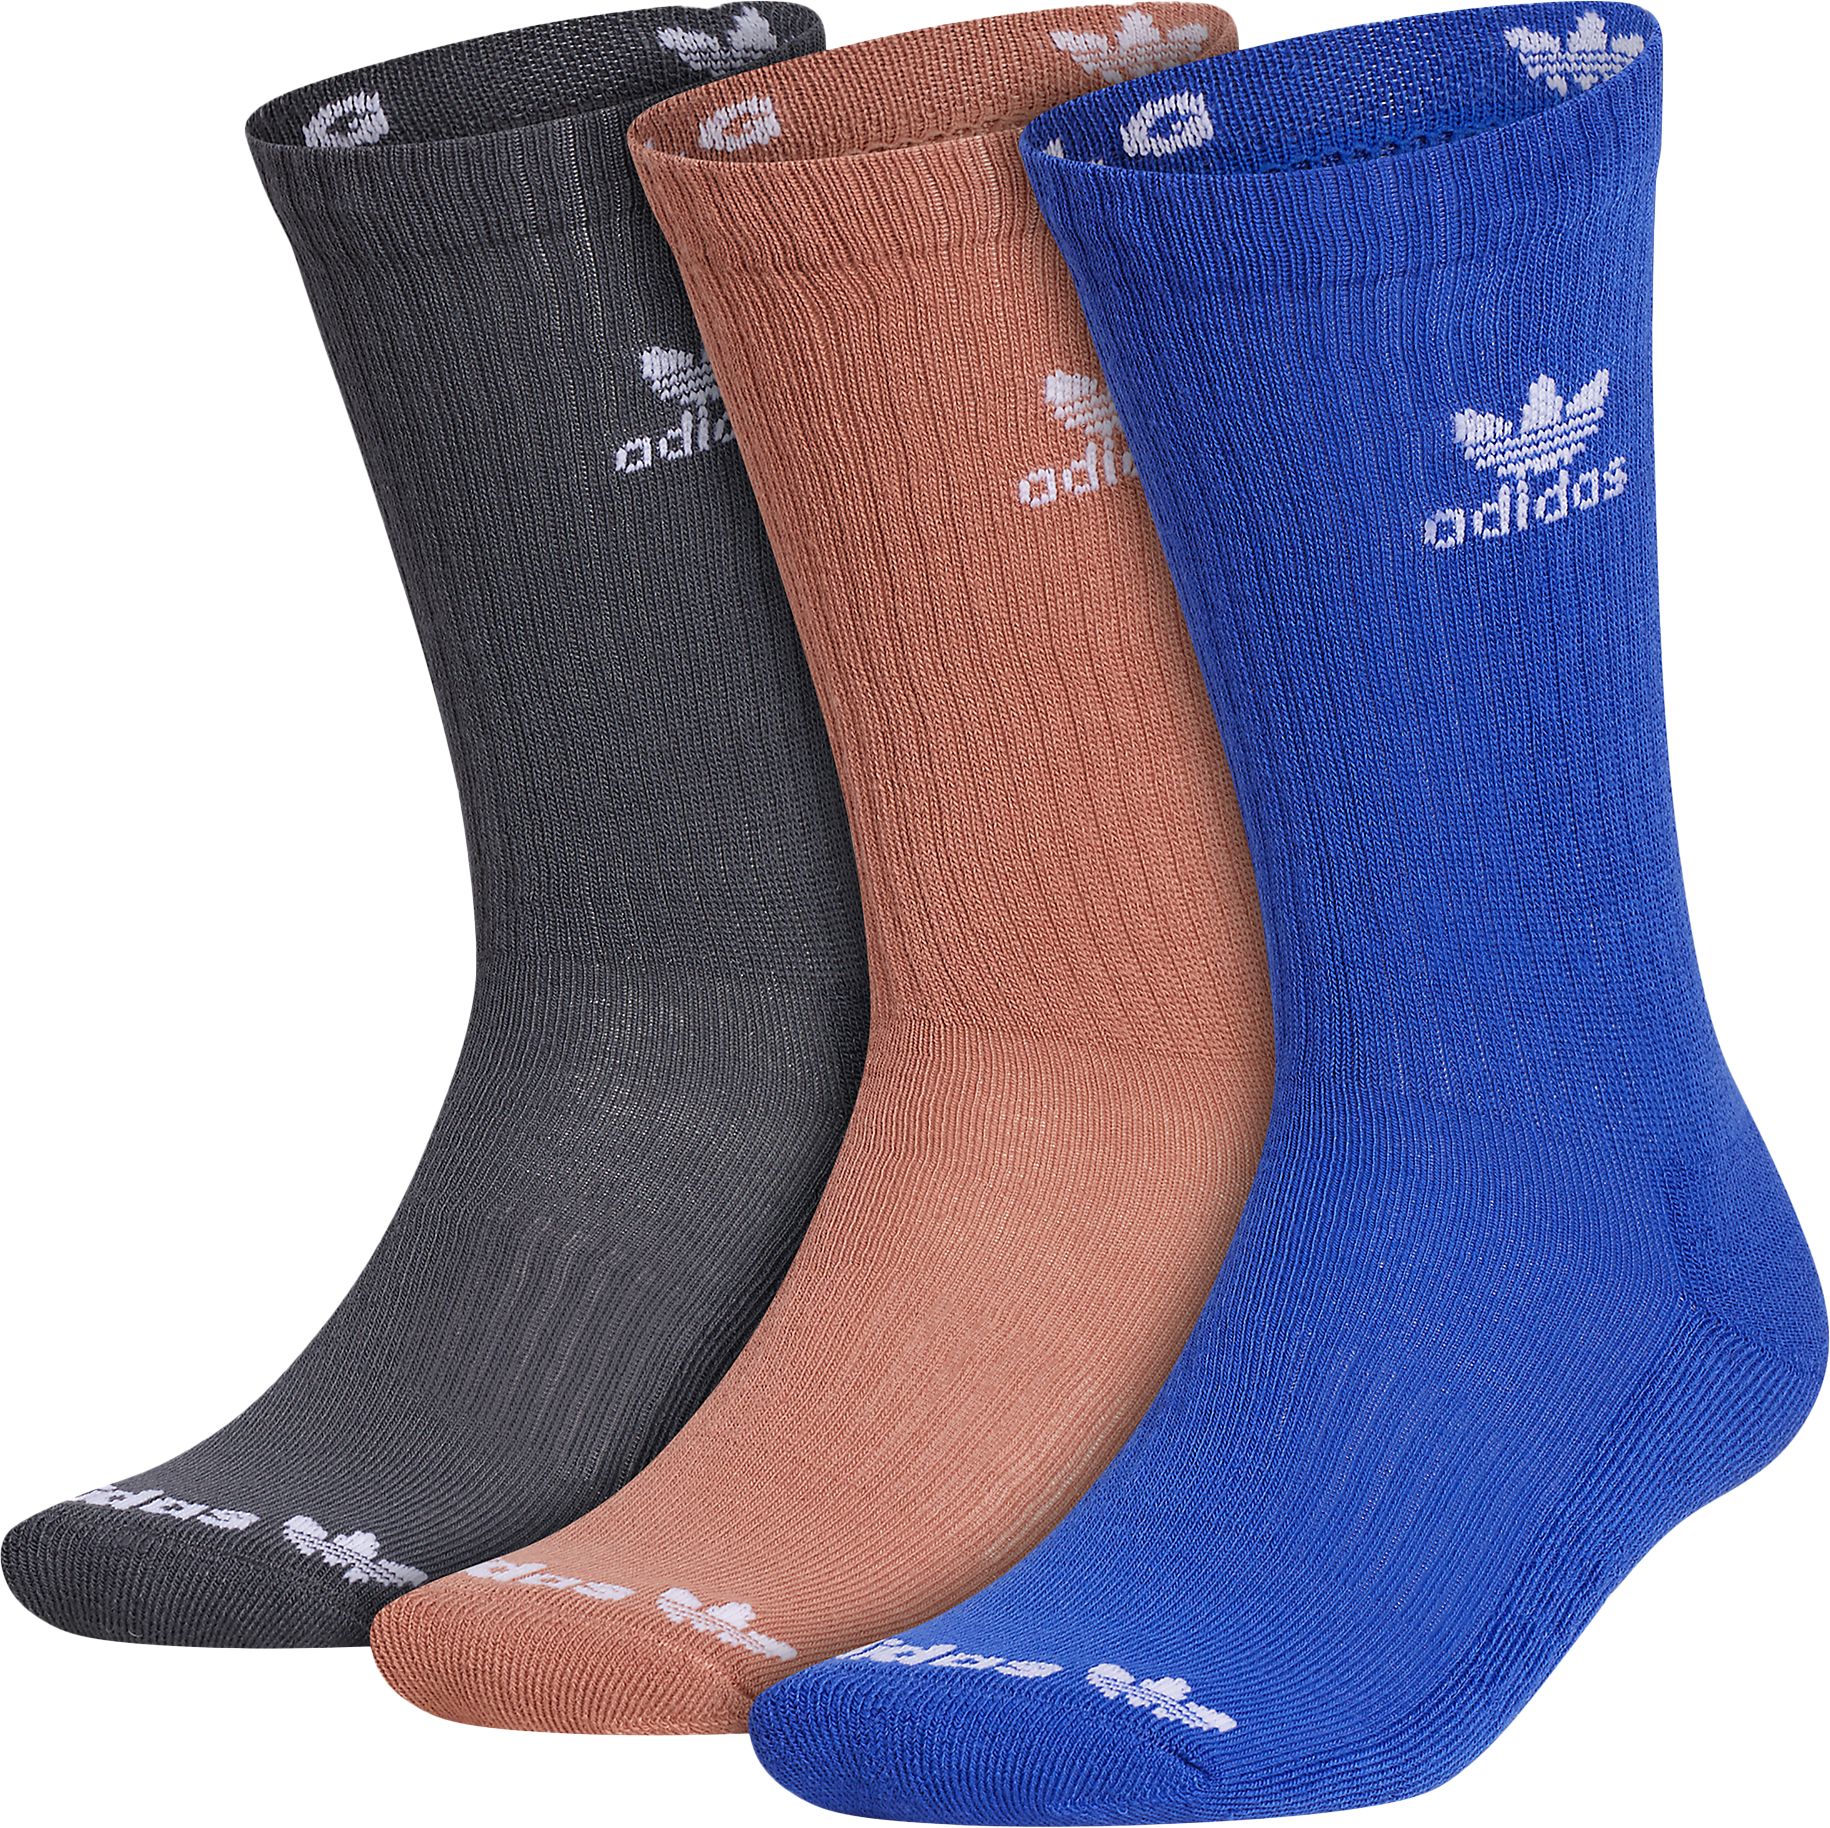 adidas Originals Mens Color Wash Crew Socks - 3 Pack